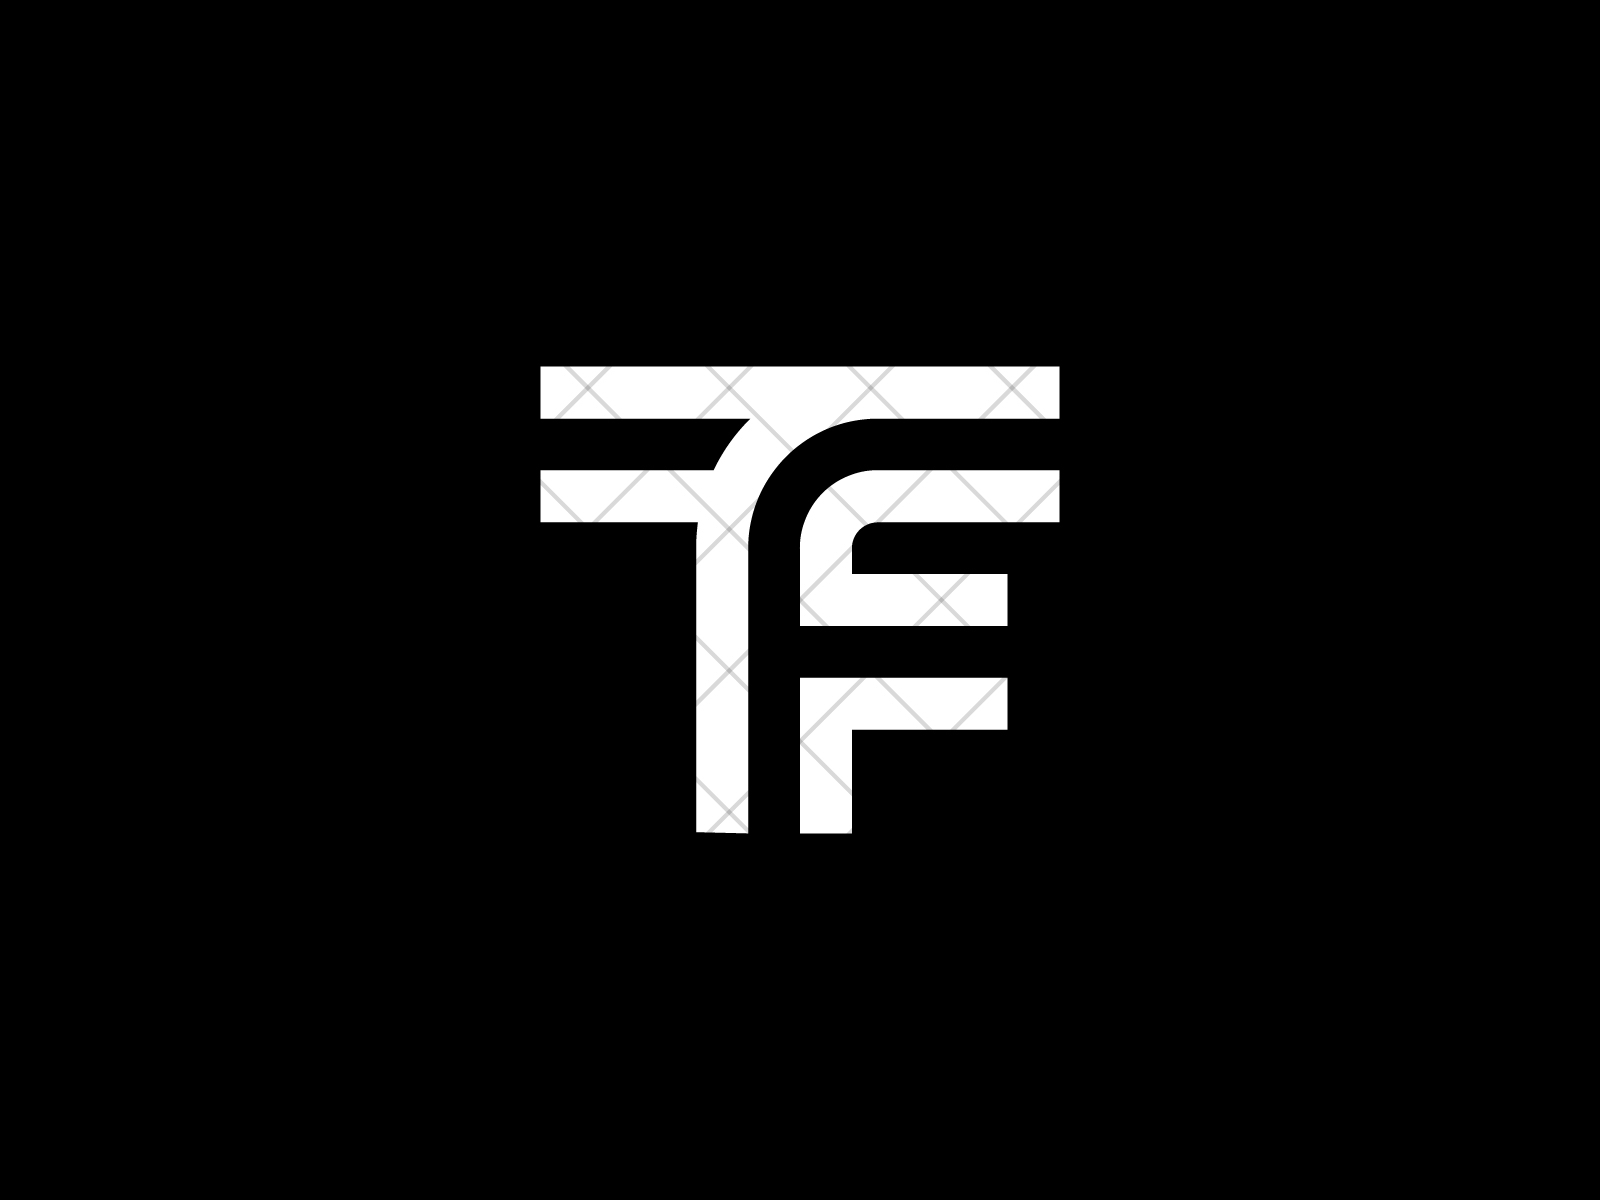 TF Logo by Sabuj Ali on Dribbble